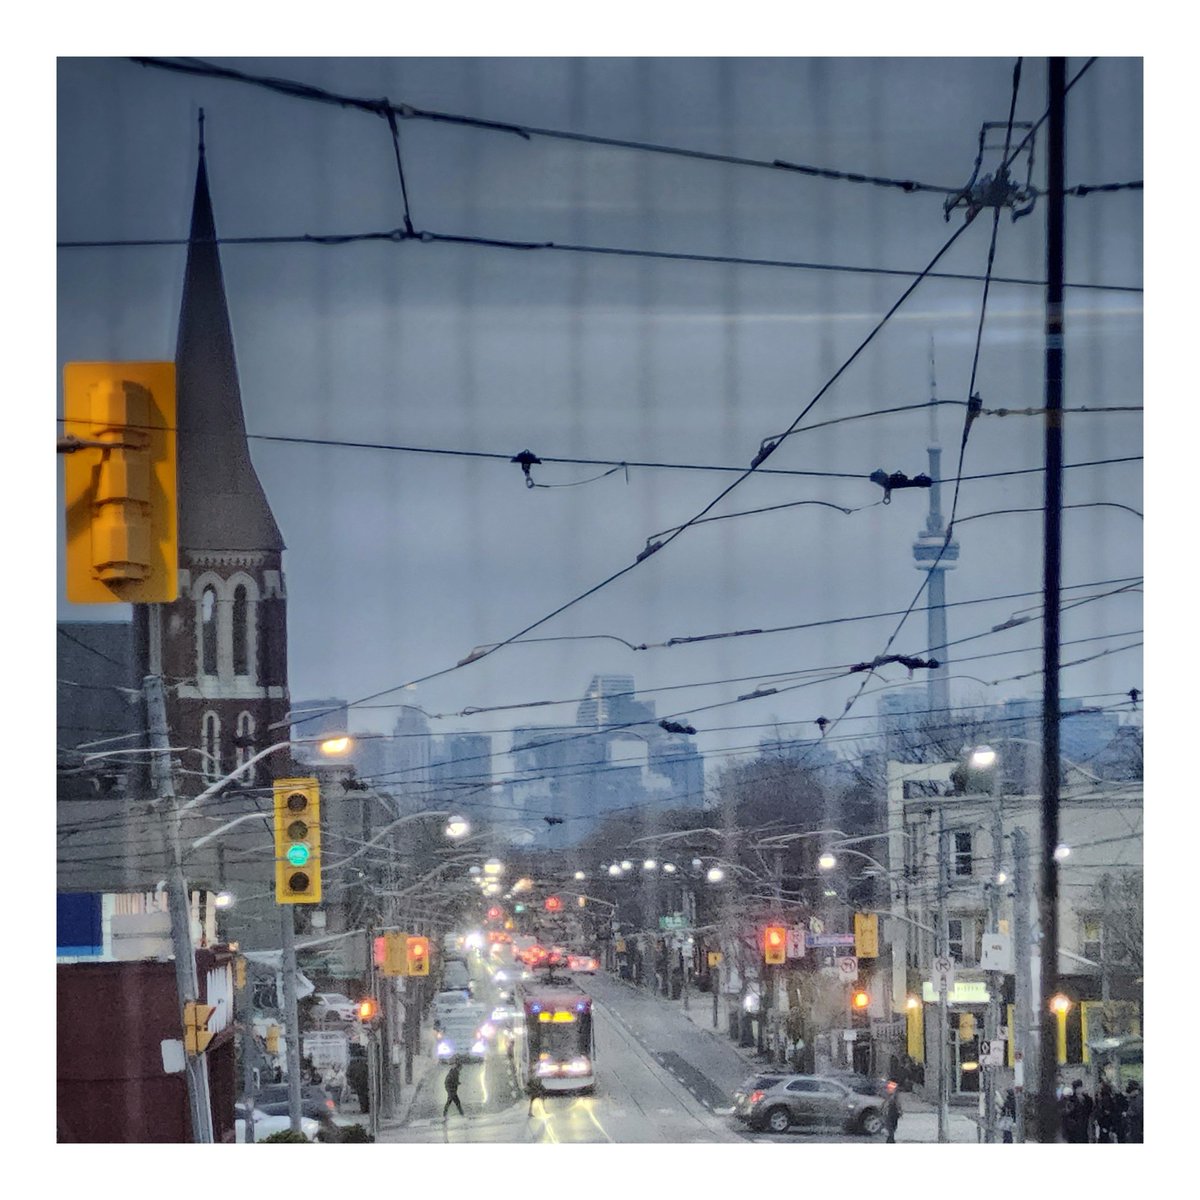 Dirty Rearview. #TTC #Toronto #DundasStreetWest #DundasStreetcar #CNtower #TransitPhotography #Photography